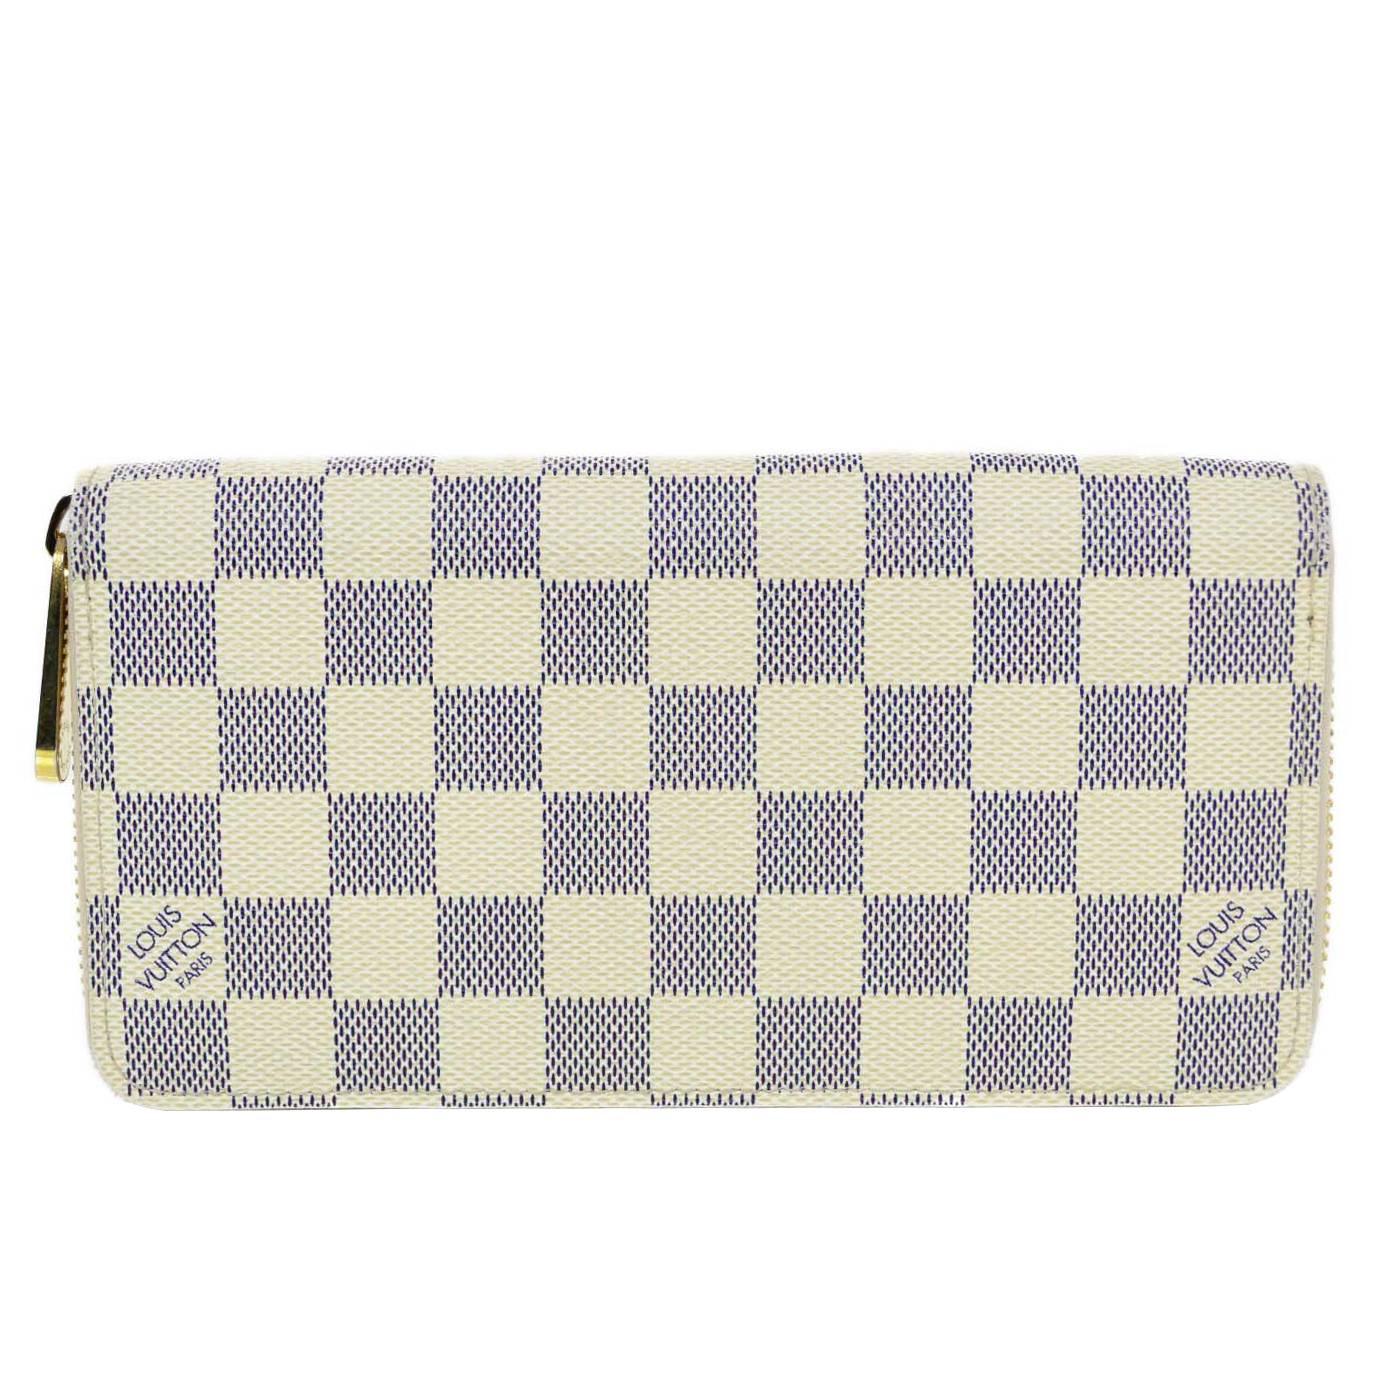 Louis Vuitton Damier Azur Zippy Wallet with Box and Dust Bag